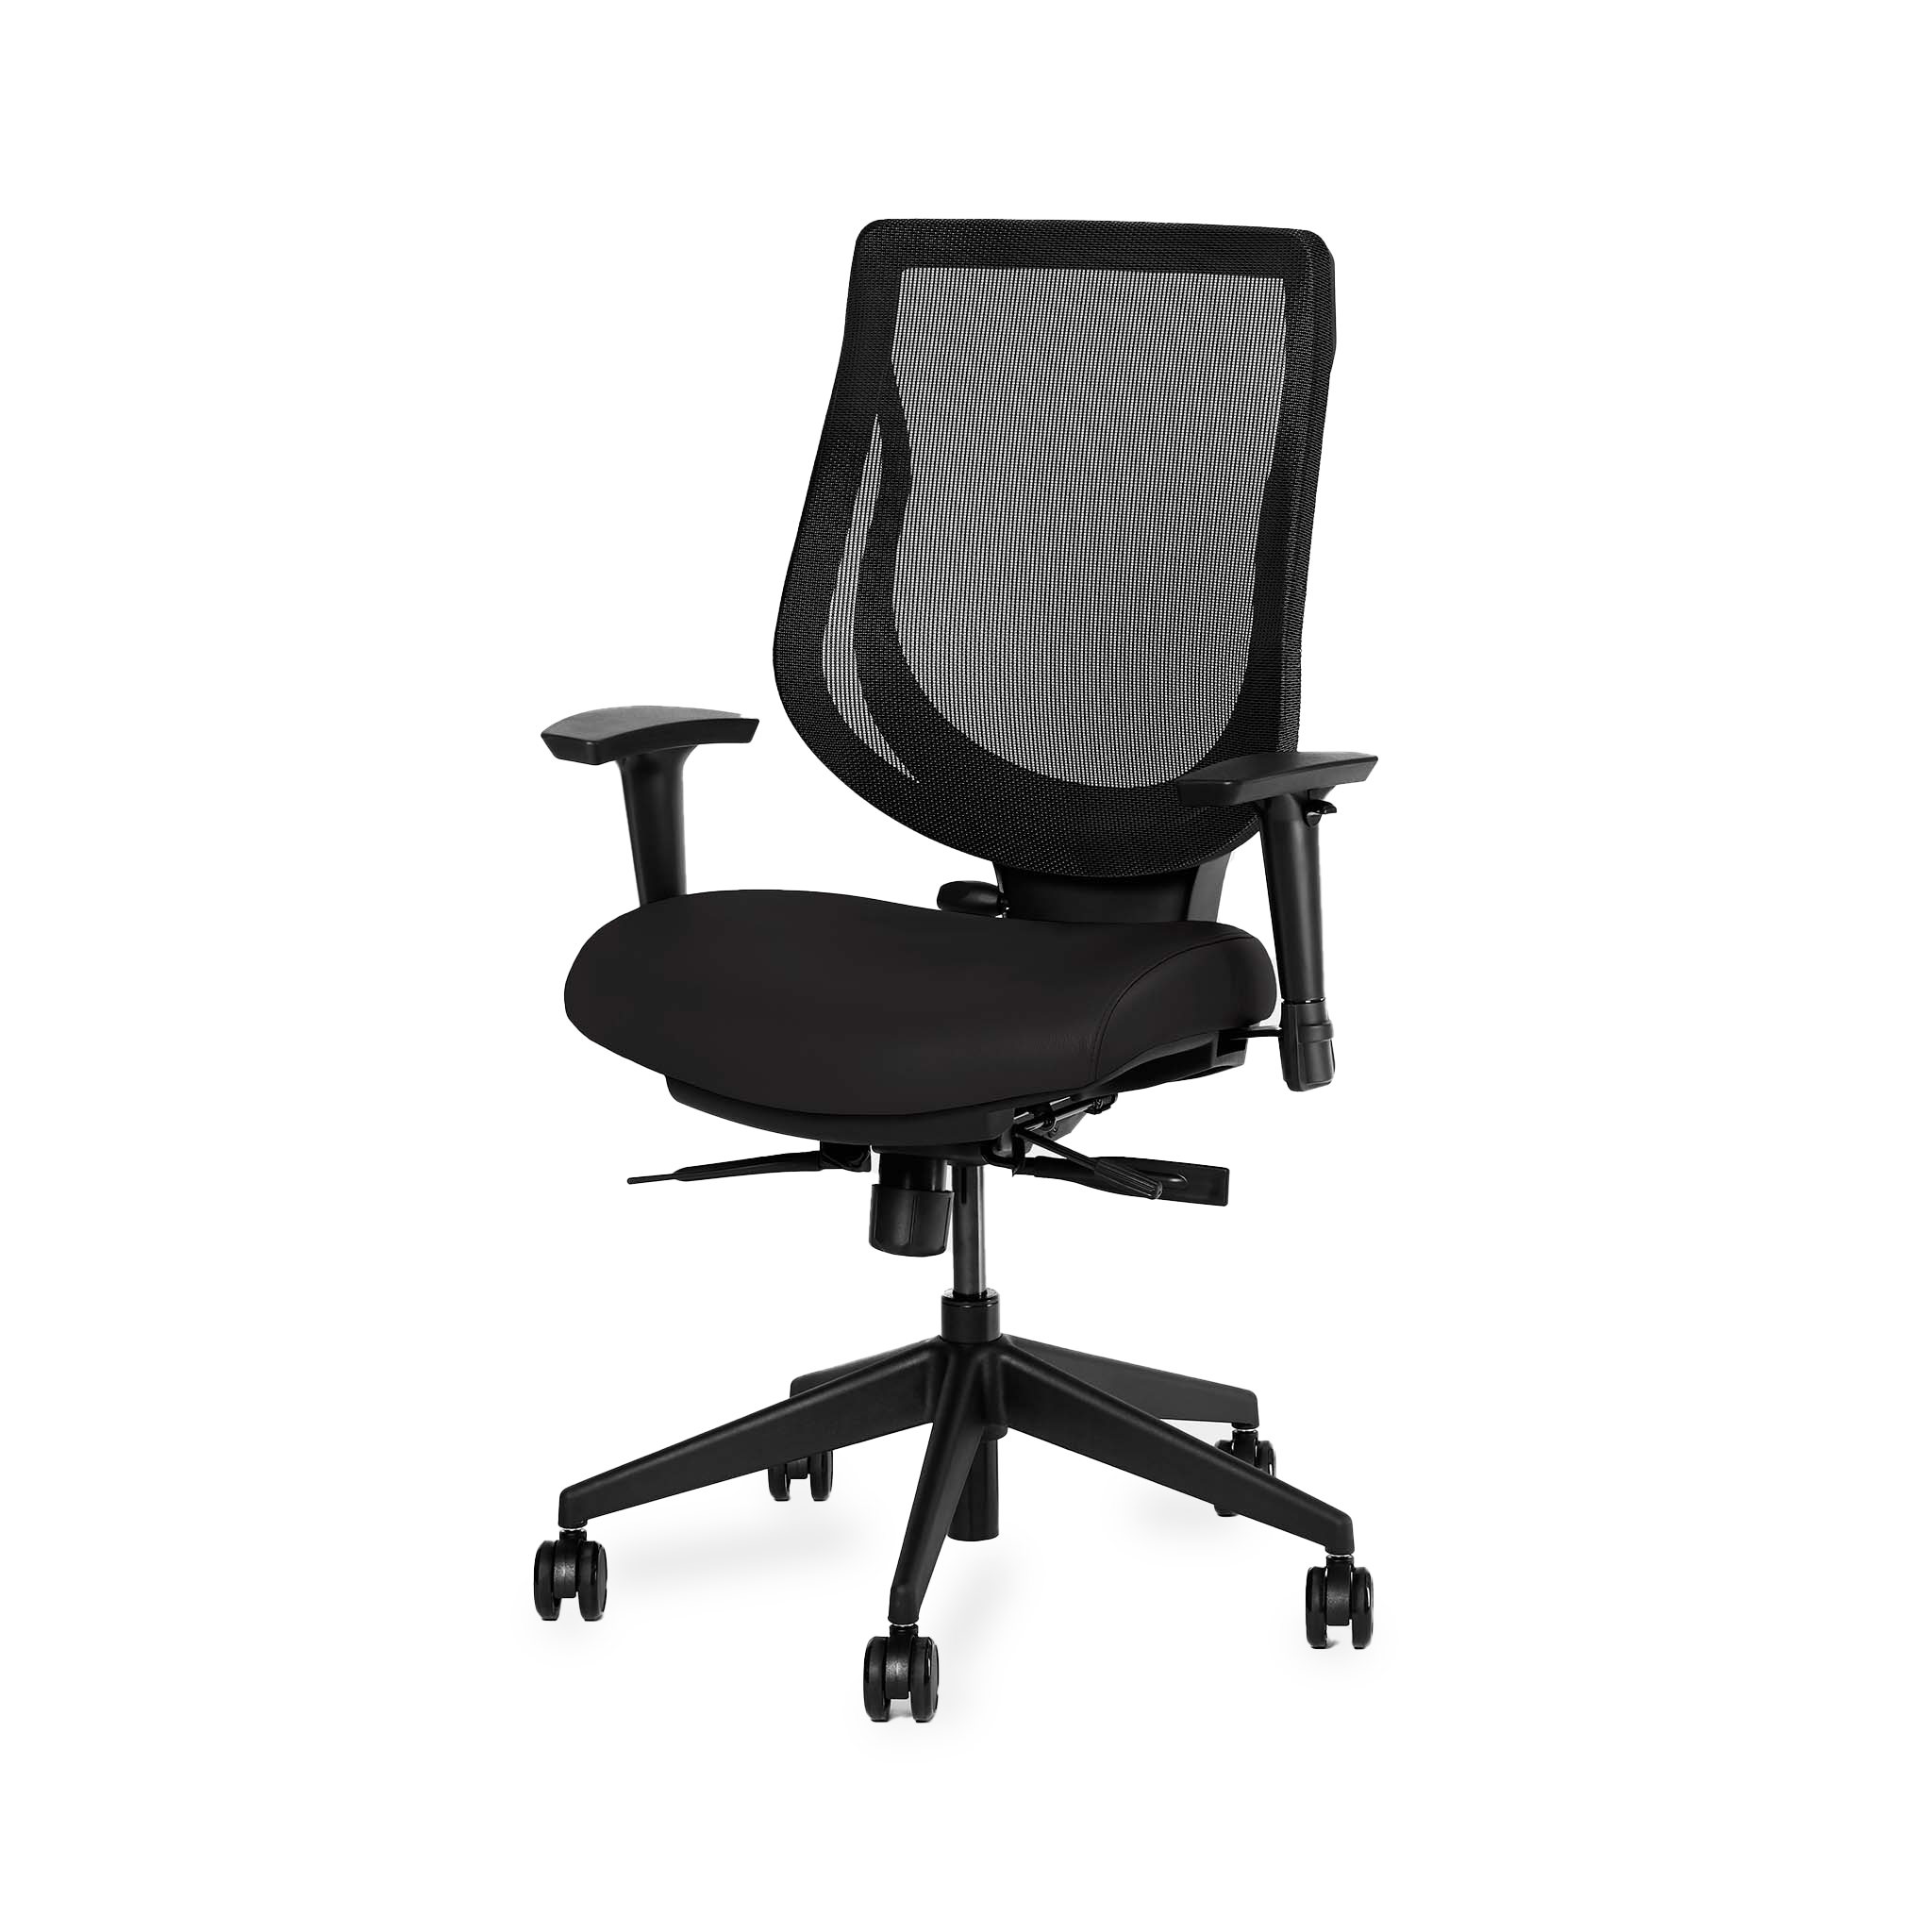 YouToo Ergonomic Chair - Black-MidnightBlack - Noir-MidnightBlack